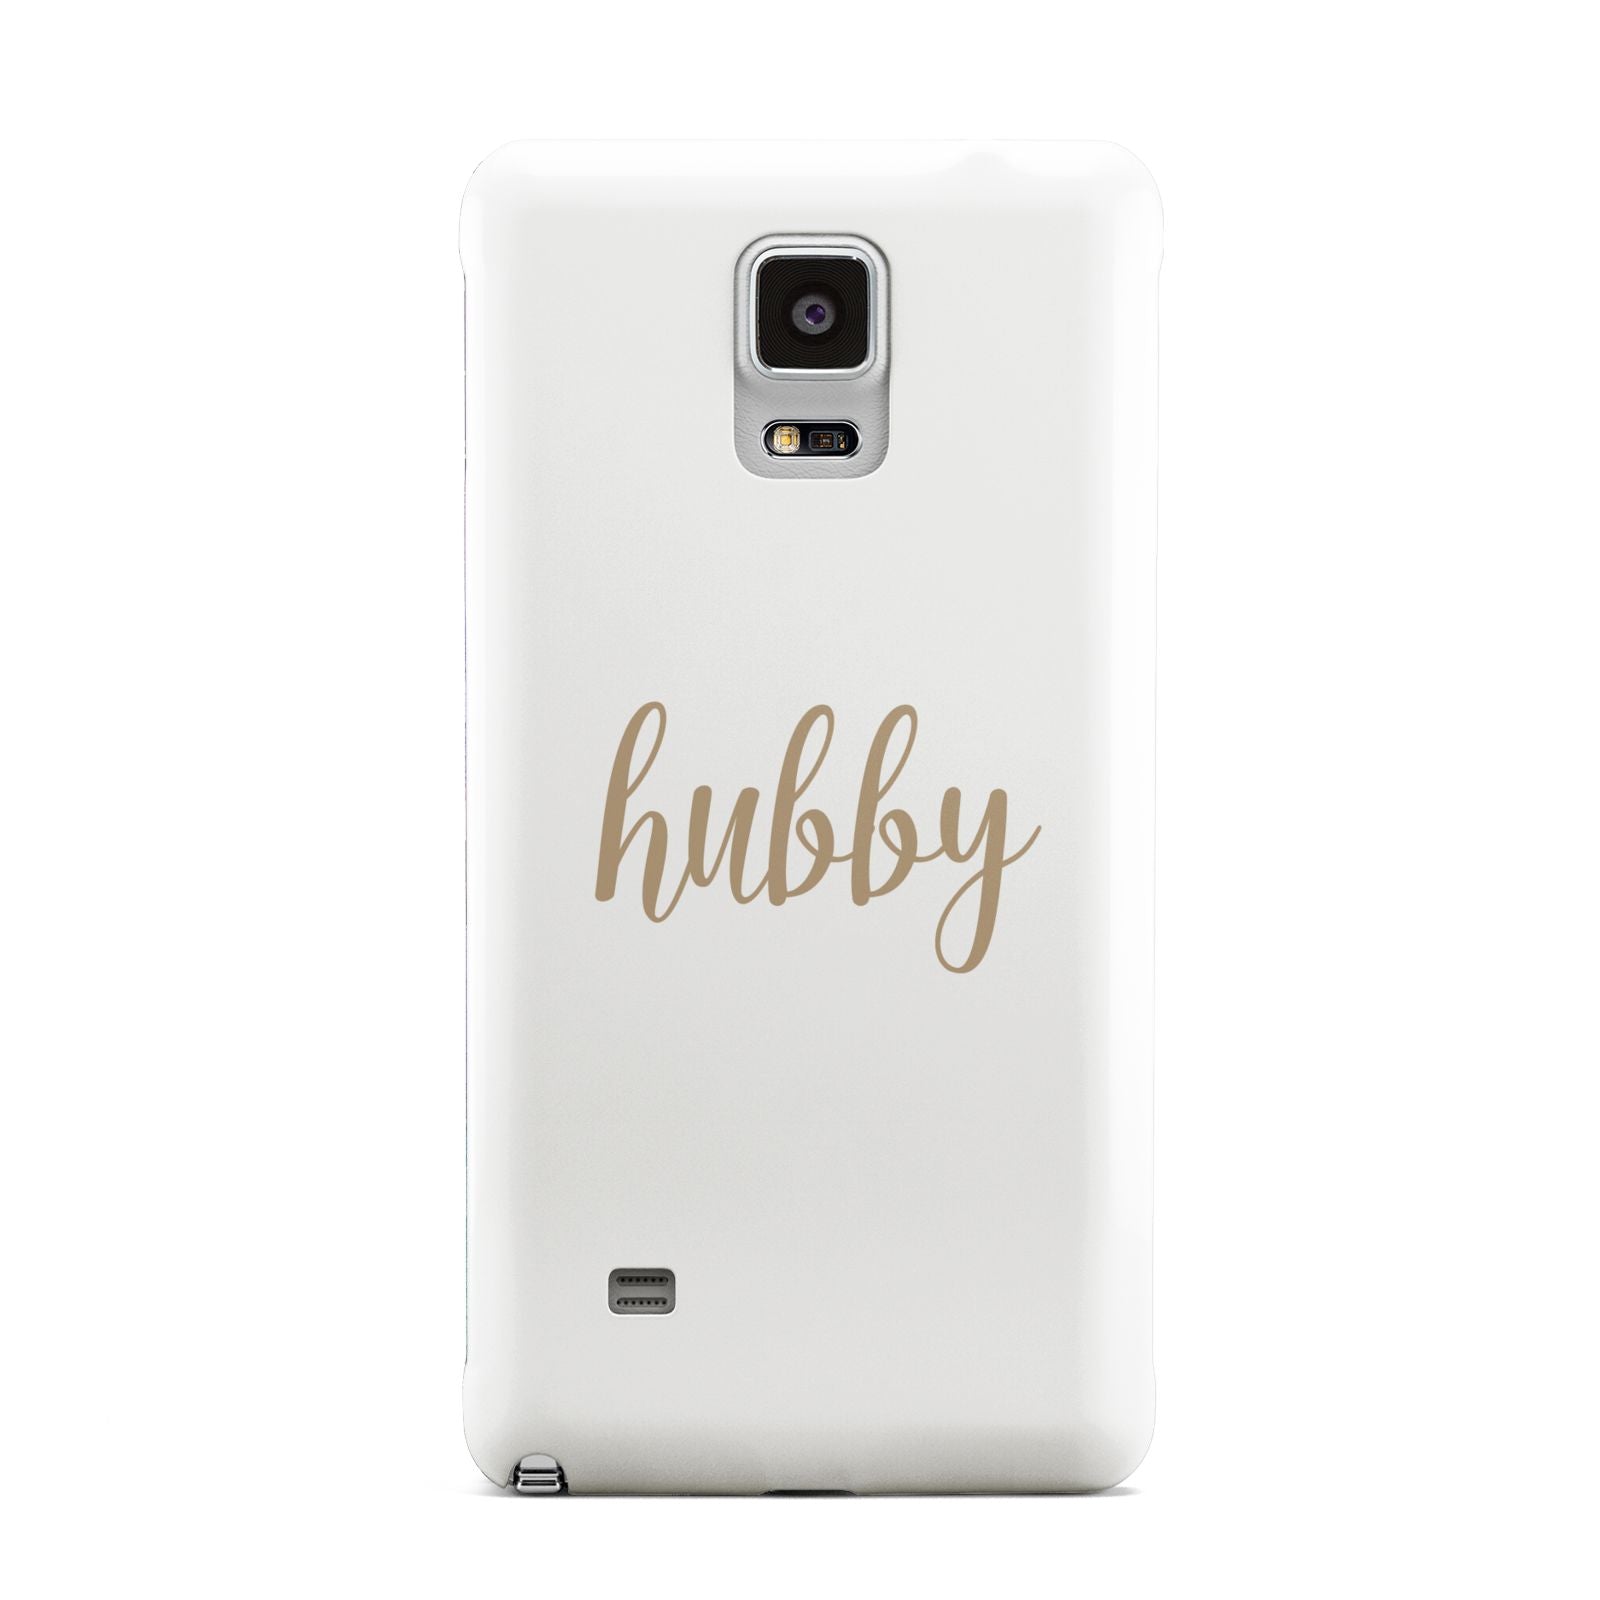 Hubby Samsung Galaxy Note 4 Case